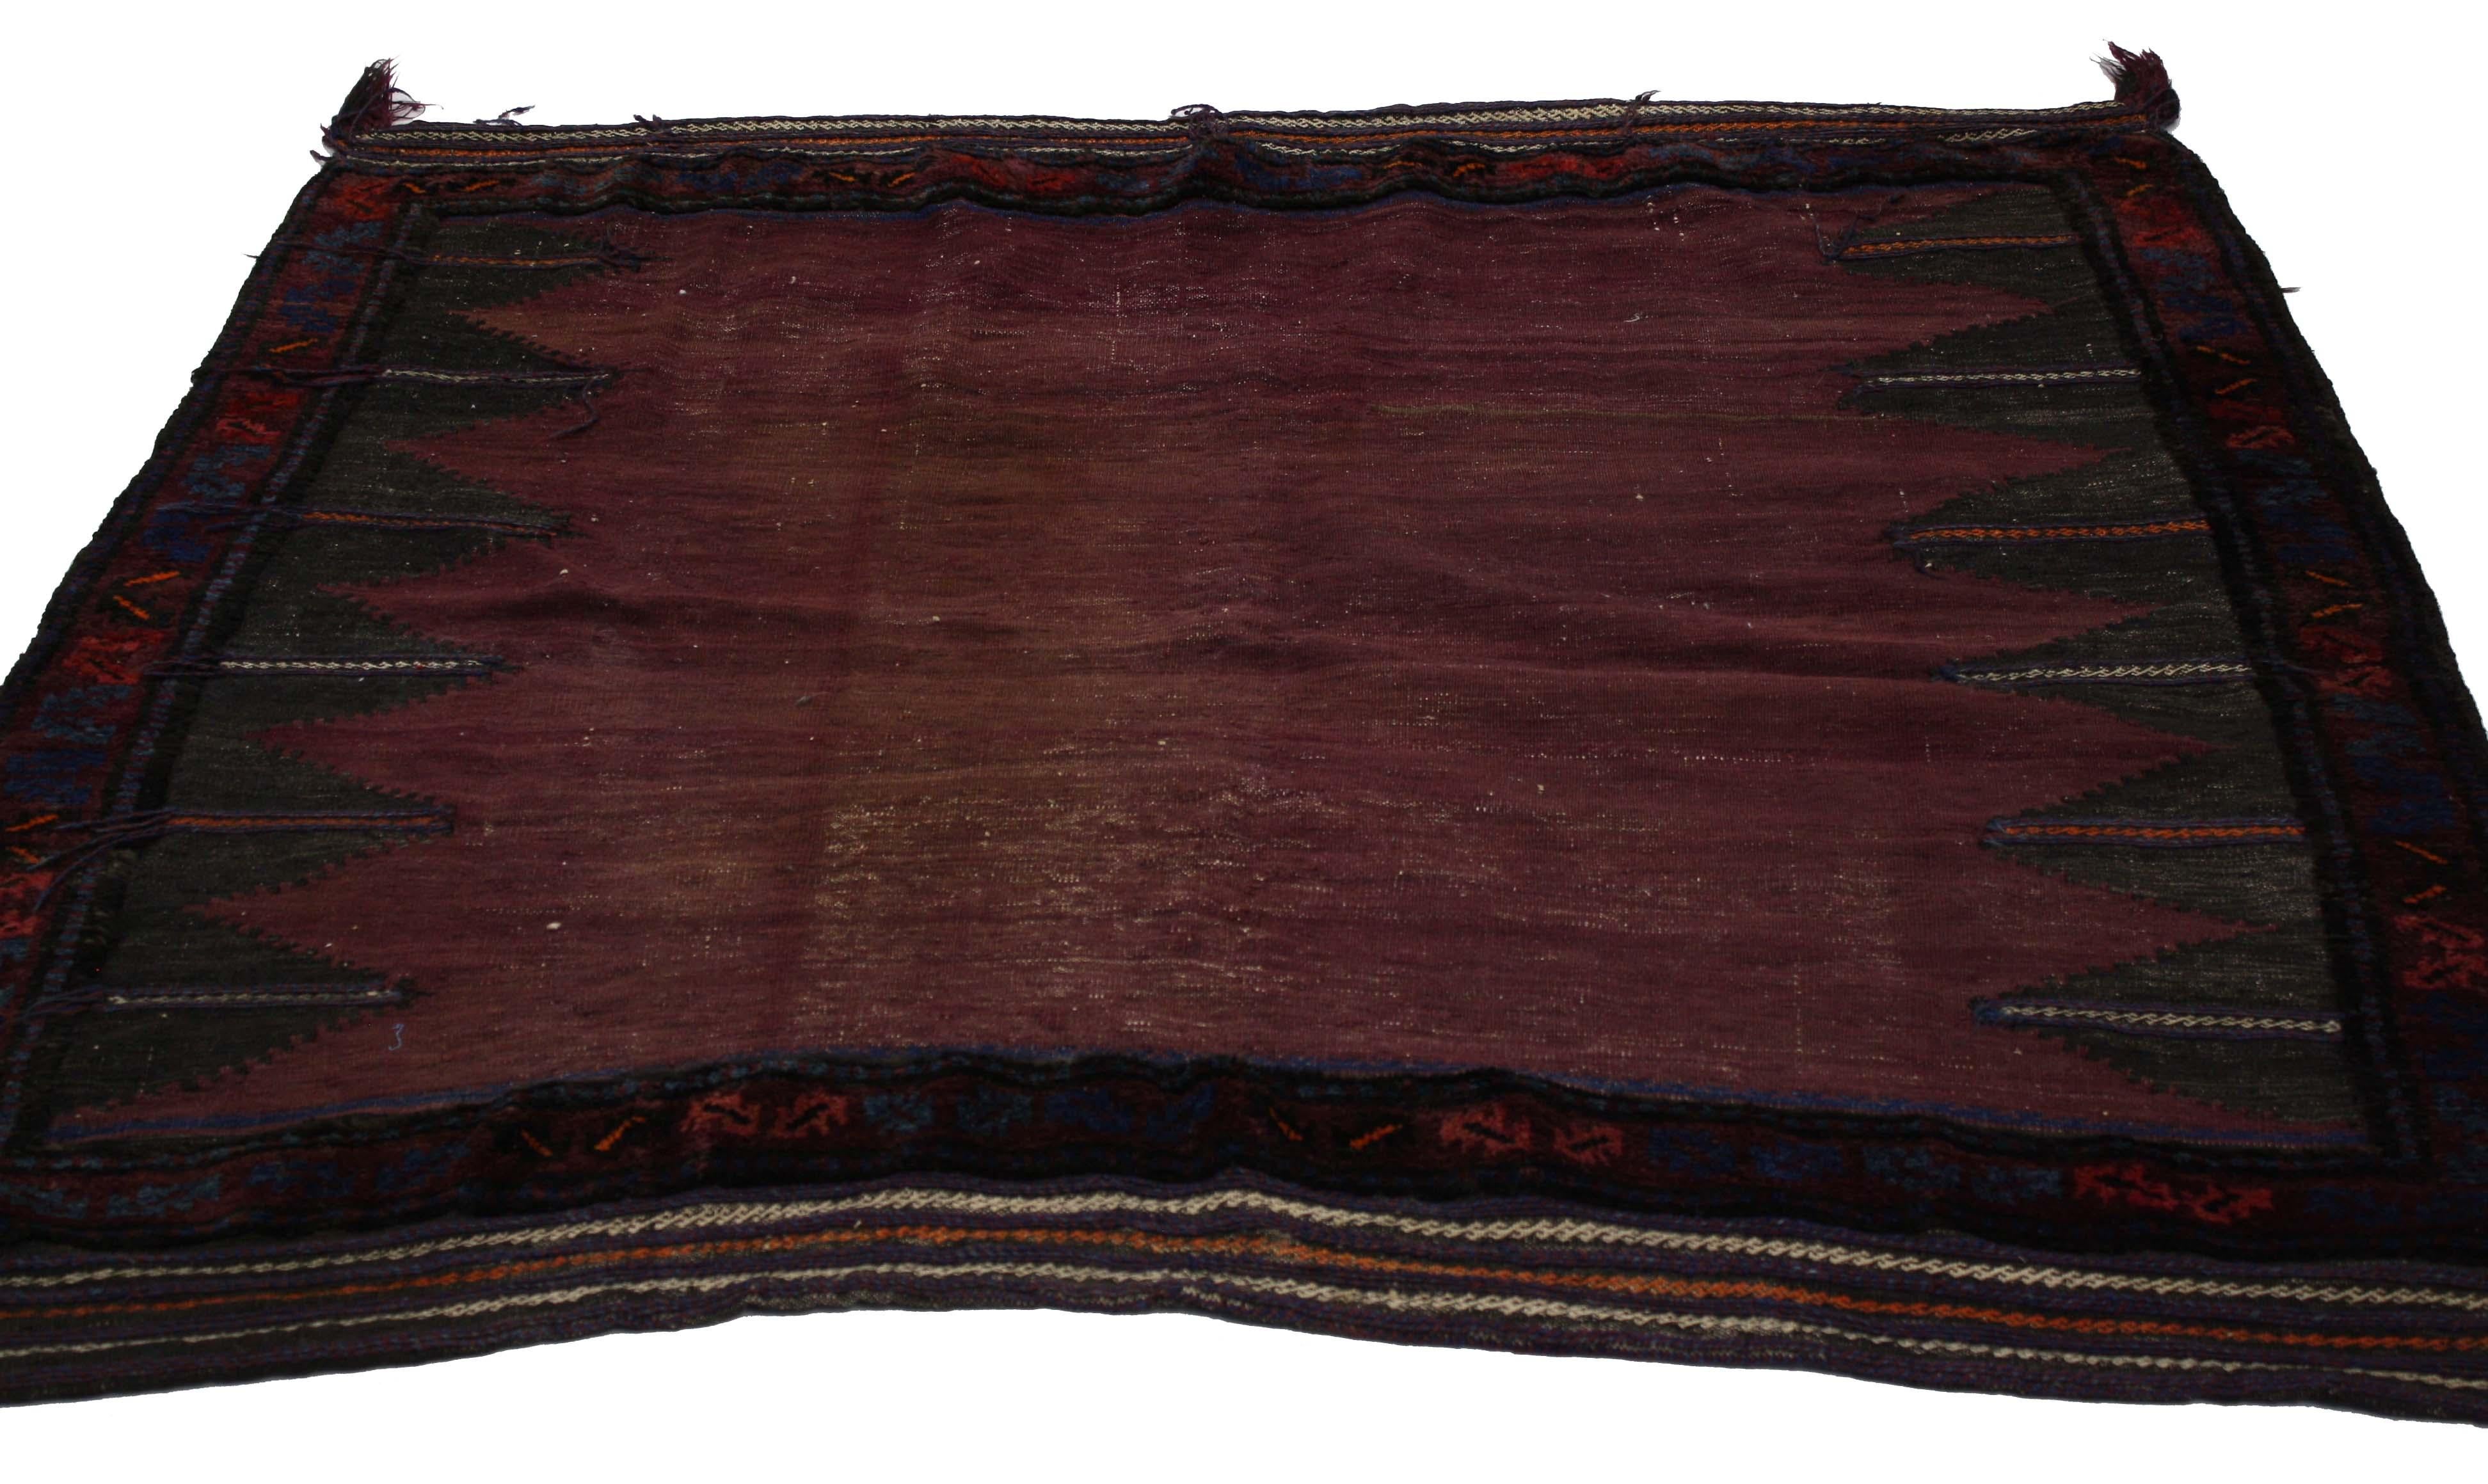 Hand-Knotted Antique Baluch Bagface, Saddlebag, Afghan Rug, Textile Art or Tribal Accent Rug For Sale